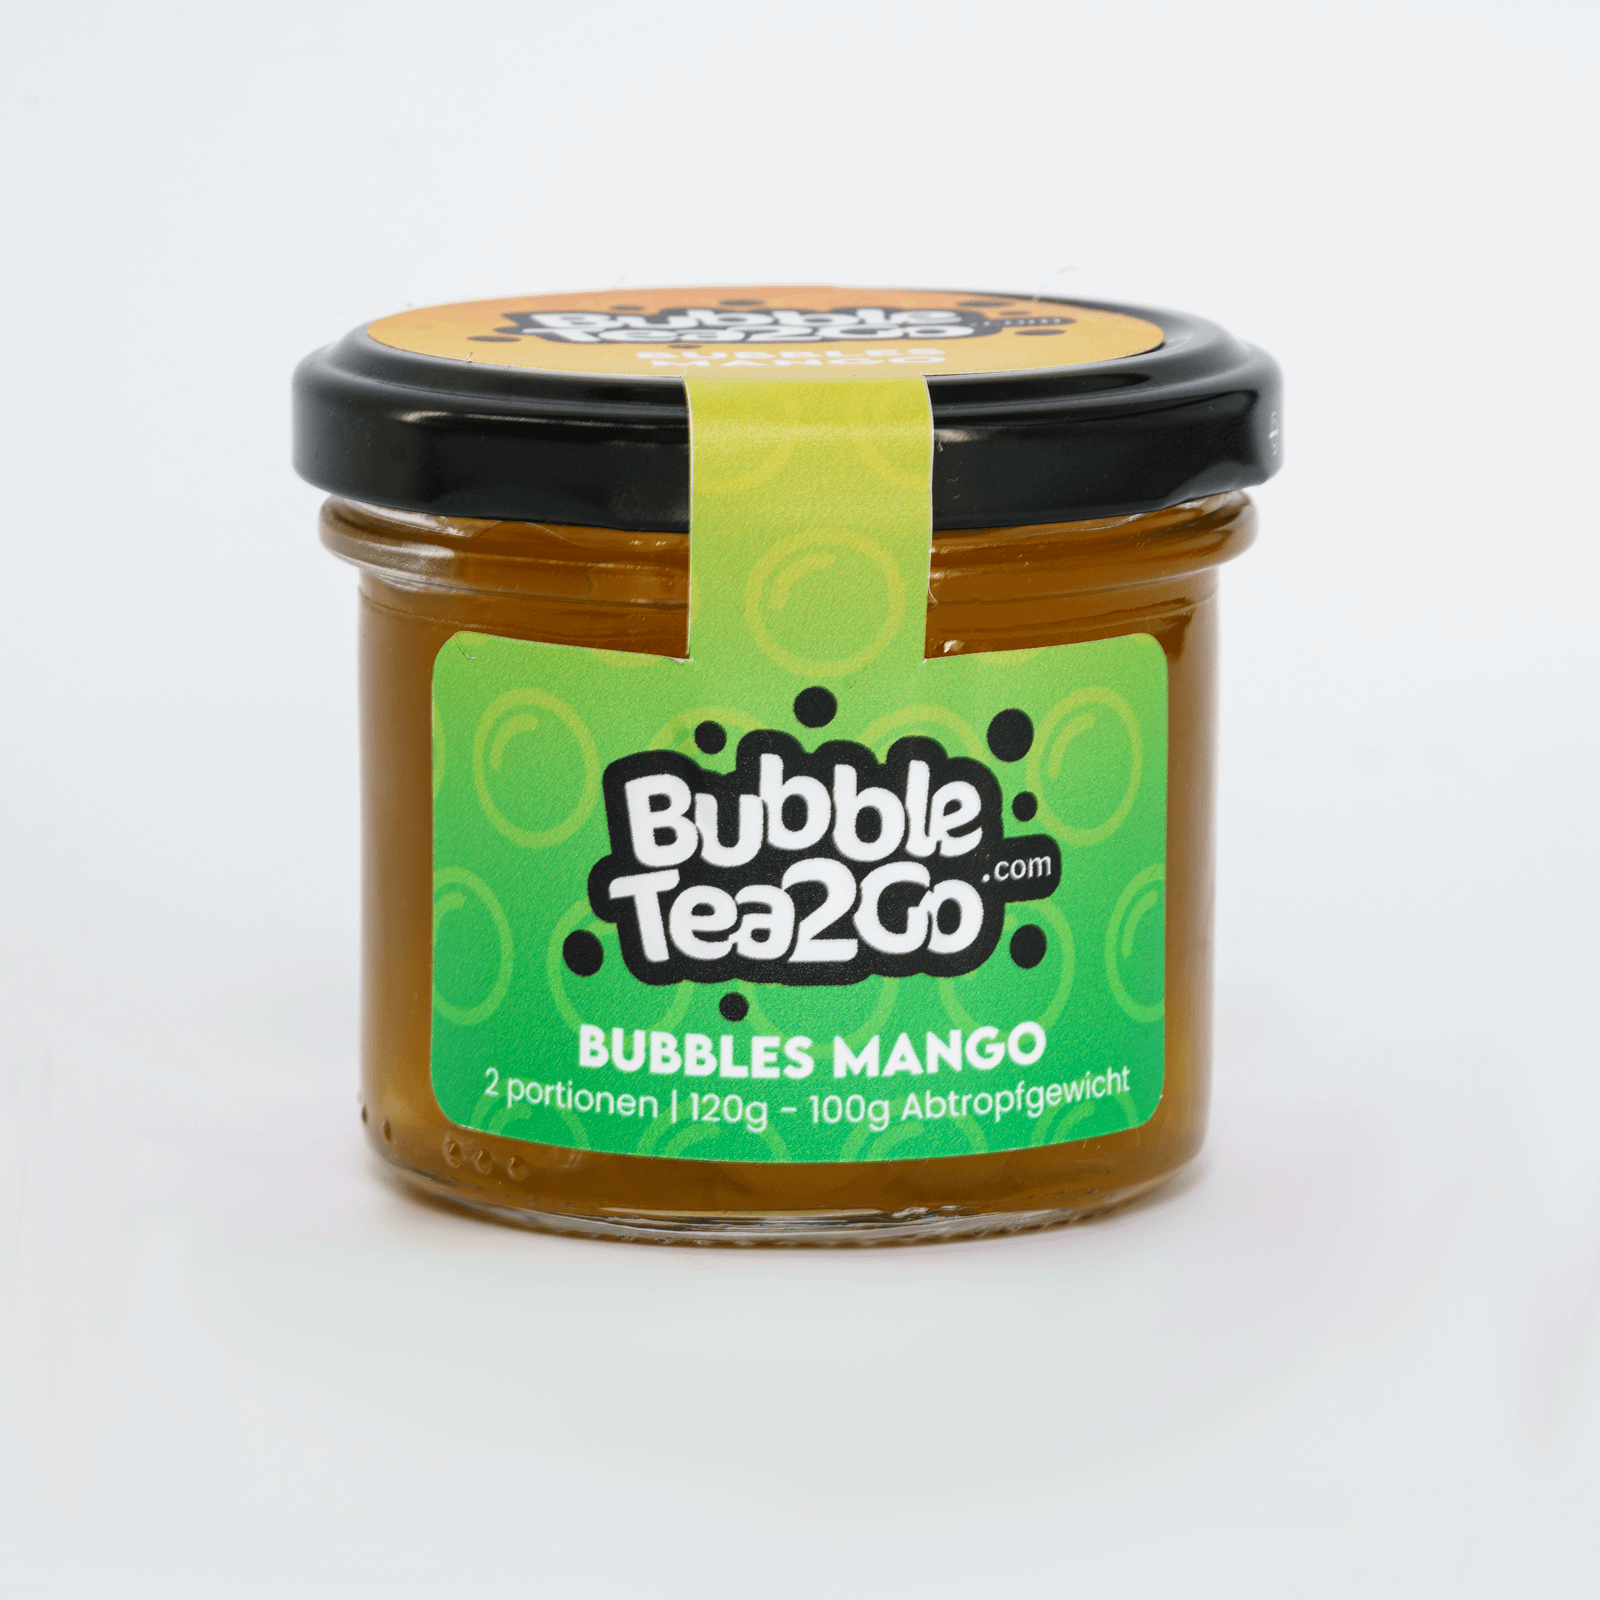 Bubbles - Mangue 2 portions (120g)